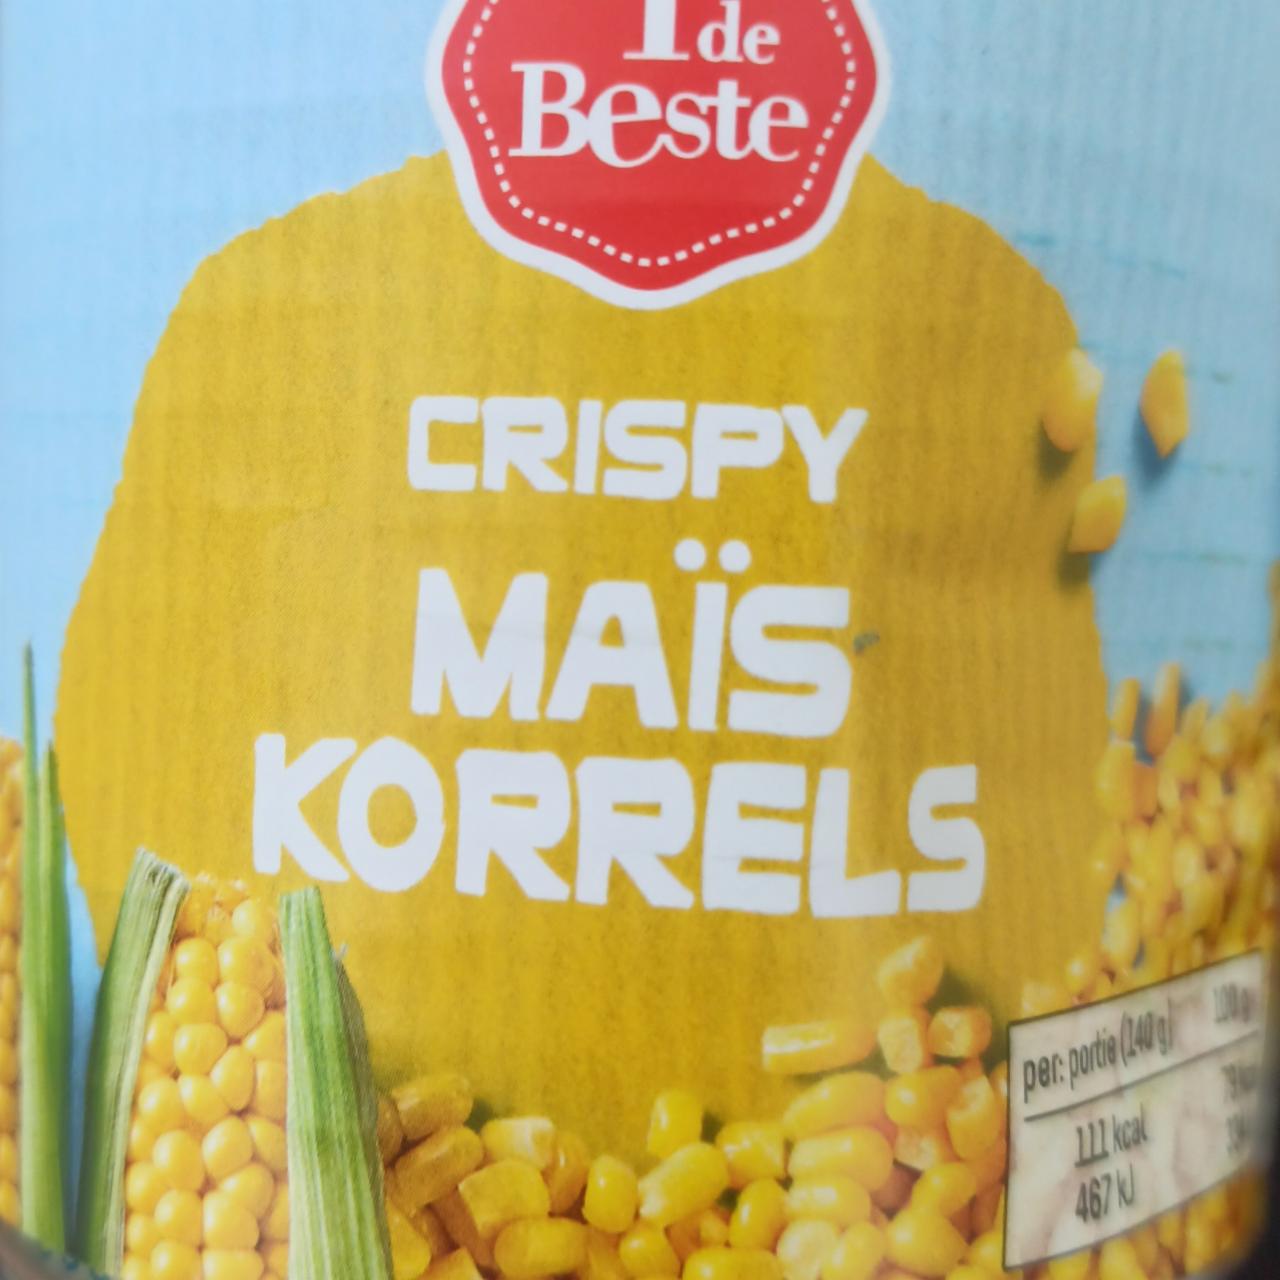 Fotografie - Crispy maïs korrels 1 de beste